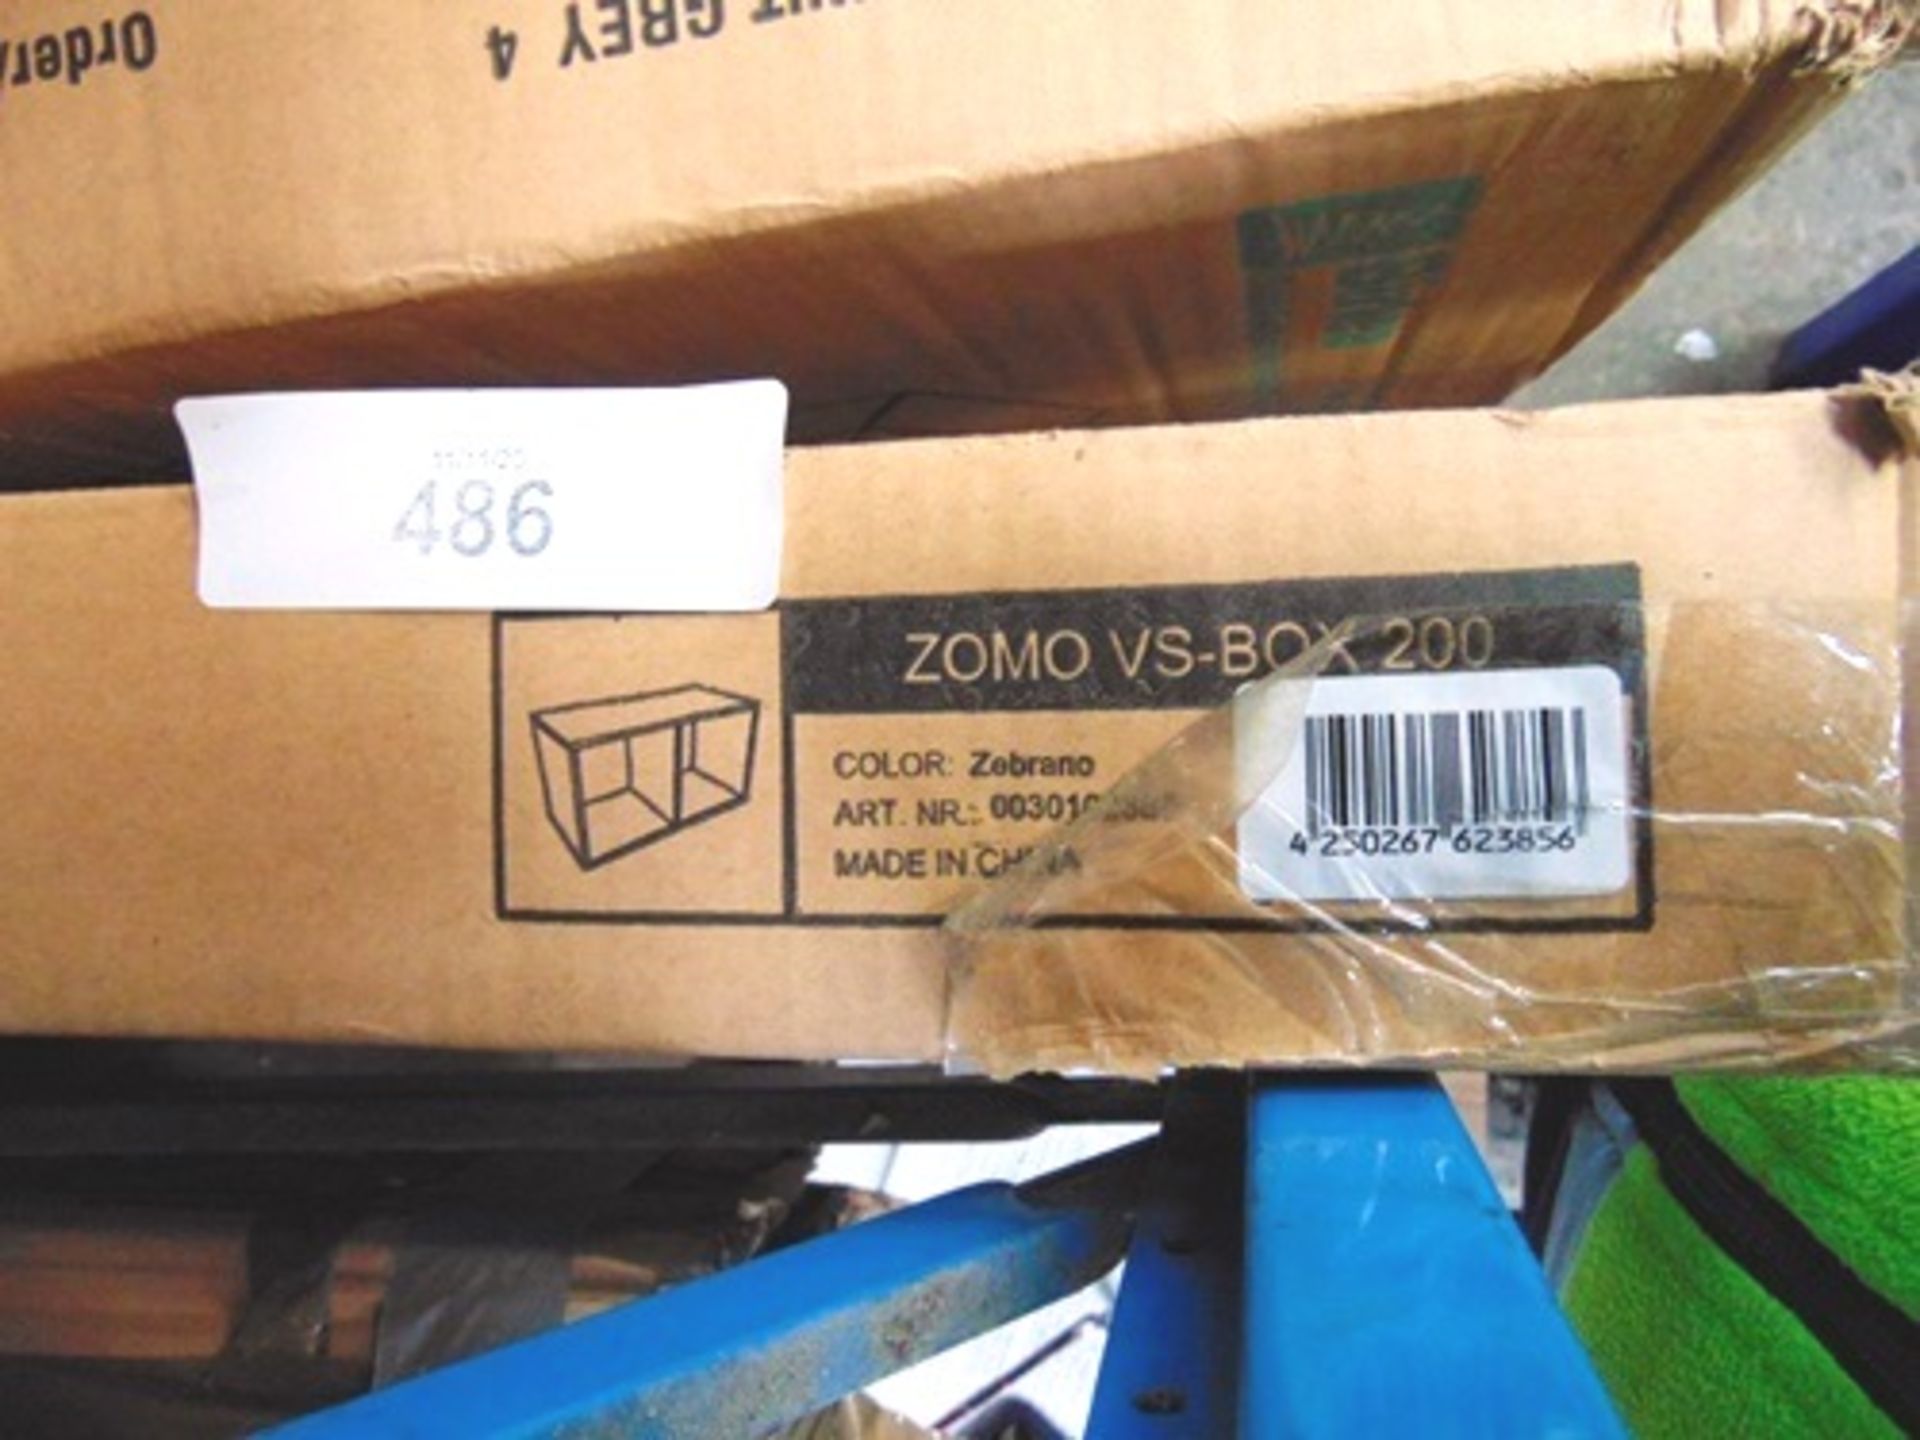 1 x Britea Boxi shelf unit, product code BOXULGRY, 1 x Zomo box shelf unit, Art No. 0030/02385 - Image 4 of 5